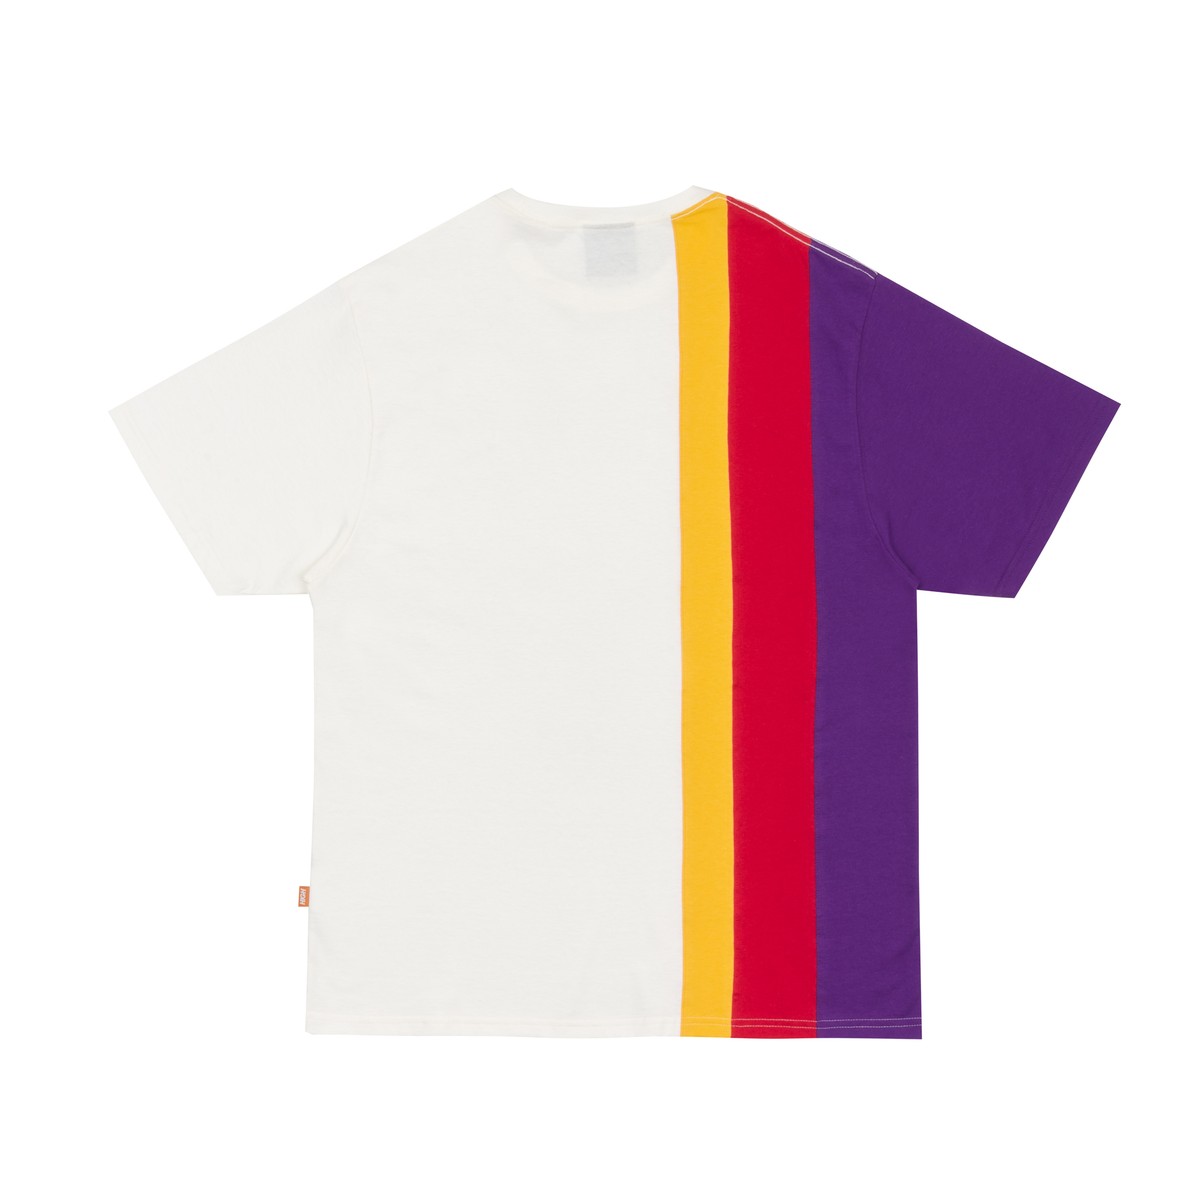 Camiseta High Rainbow Branco - Matriz Skate Shop Online